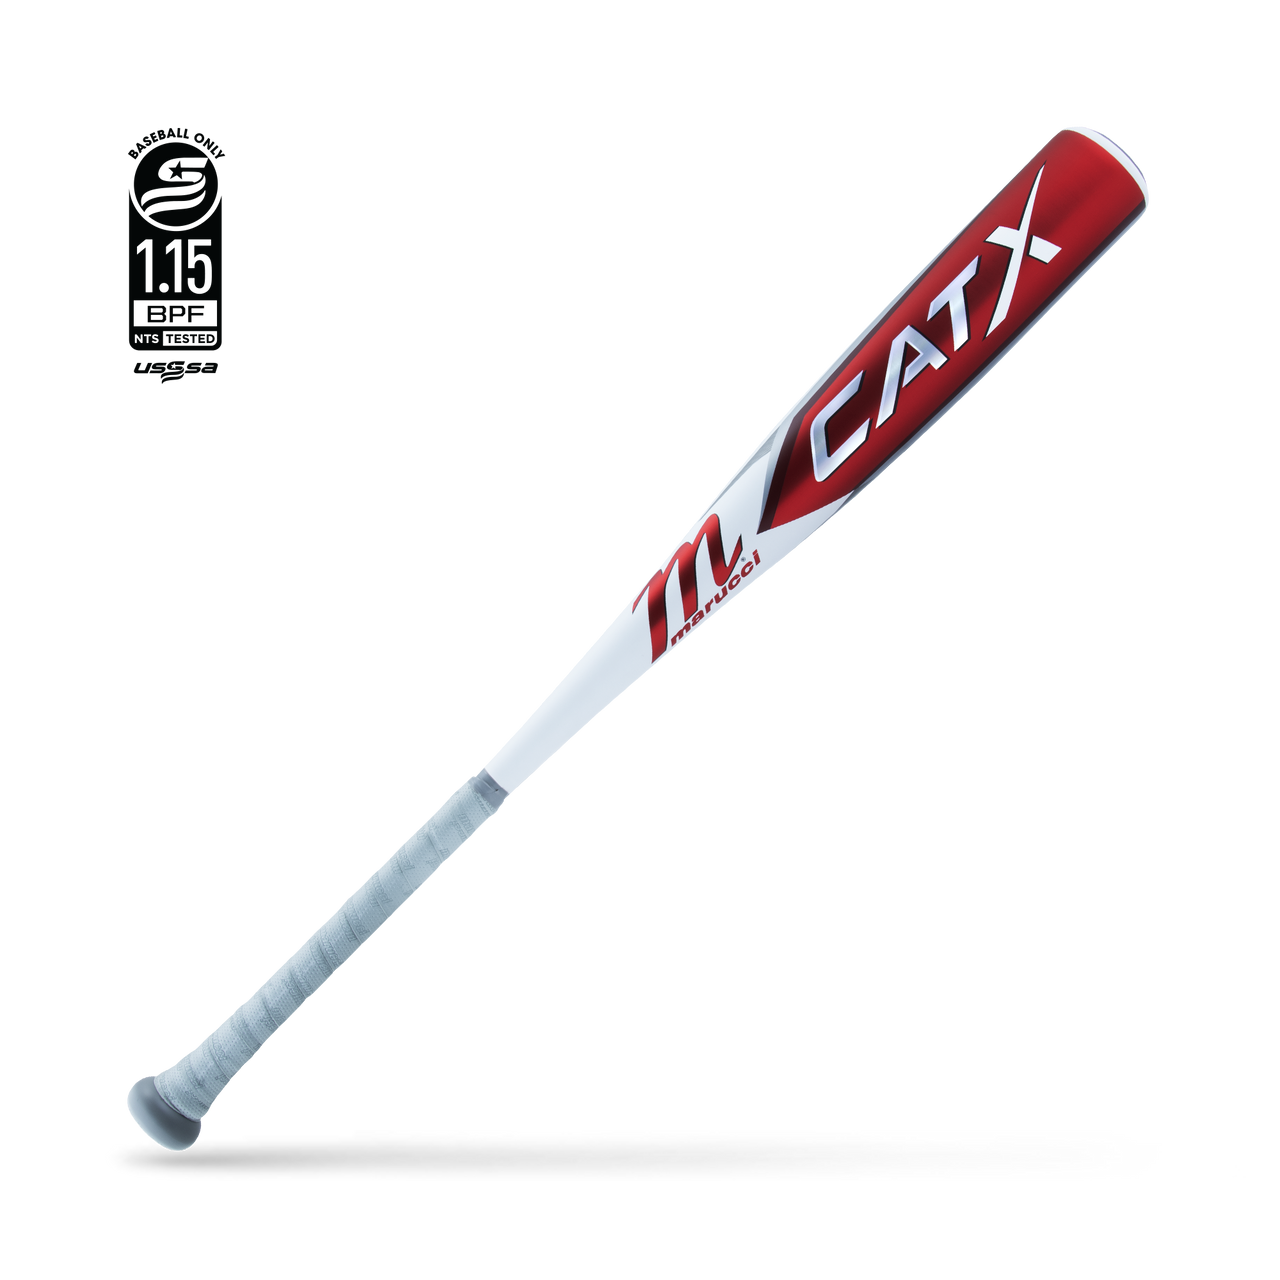 Marucci CATX SL (-8) Baseball Bat (MSBCX8)